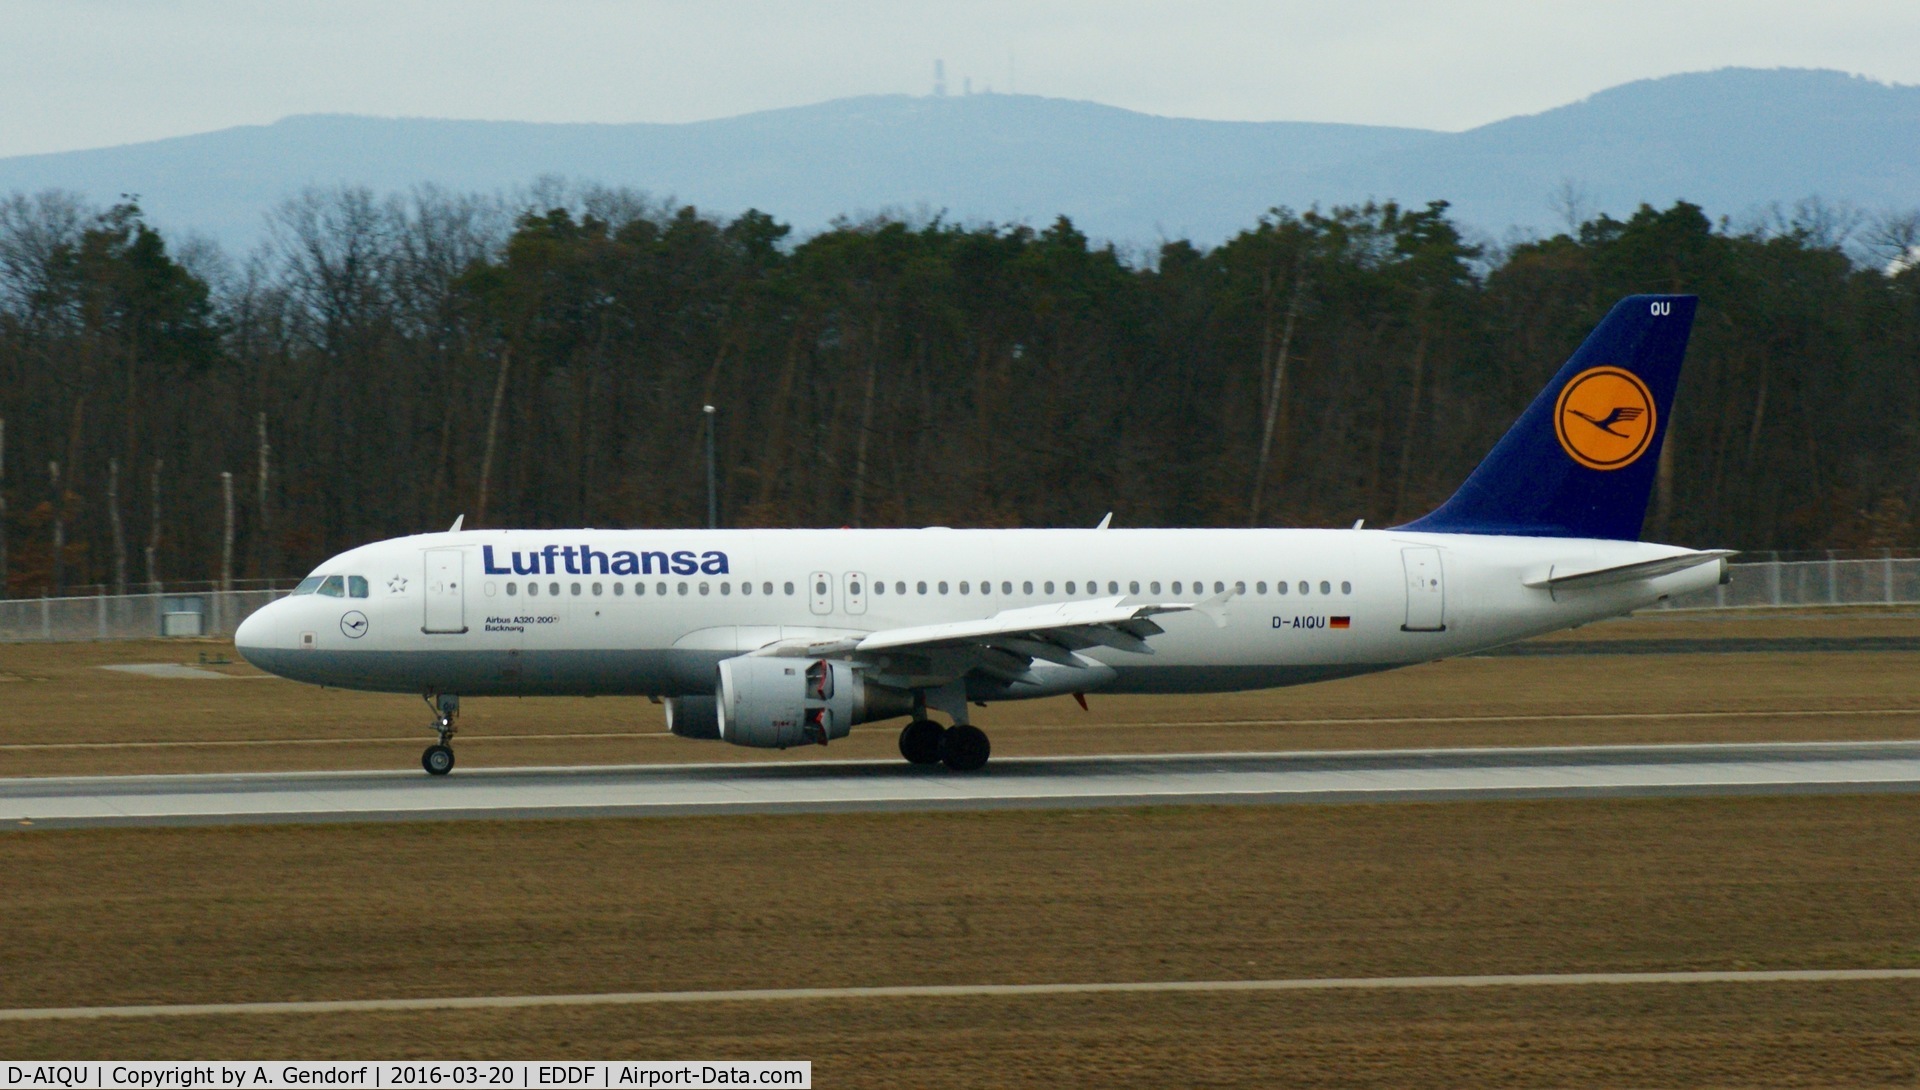 D-AIQU, 2000 Airbus A320-211 C/N 1365, Lufthansa, is here shortly after landing at Frankfurt Rhein/Main(EDDF)